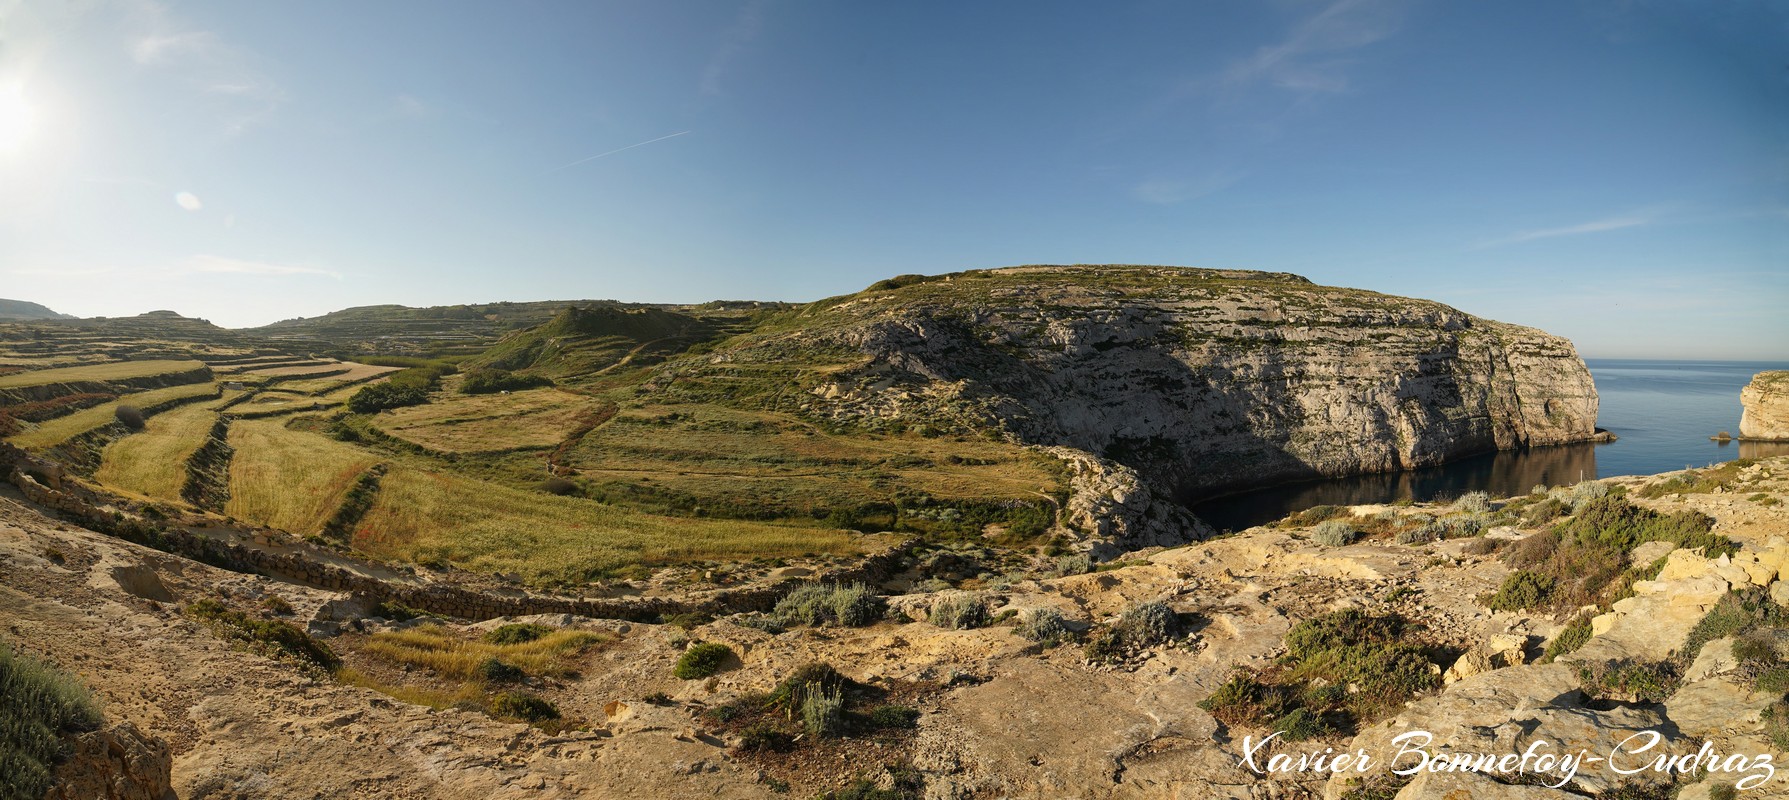 Gozo - Dwejra Bay - Panorama
Mots-clés: Dwejra geo:lat=36.04741177 geo:lon=14.19376194 geotagged Malte MLT Saint Lawrence San Lawrenz Malta Gozo paysage Mer panorama